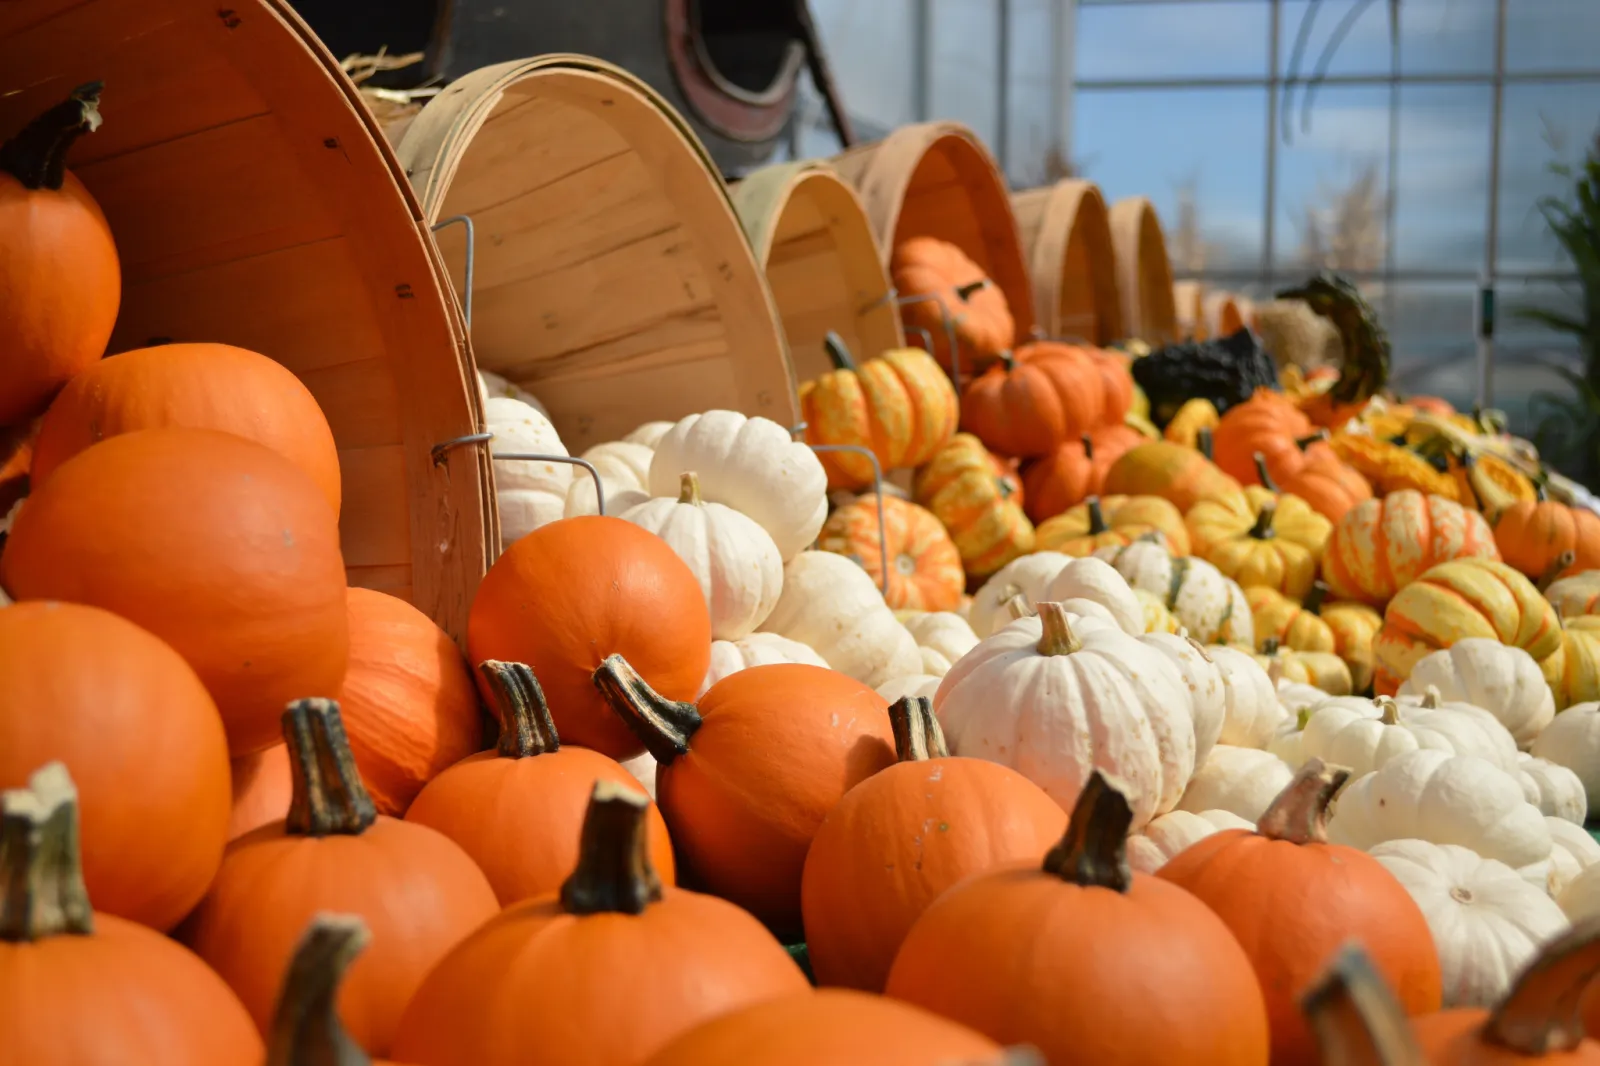 pumpkins in bins at a fall festival